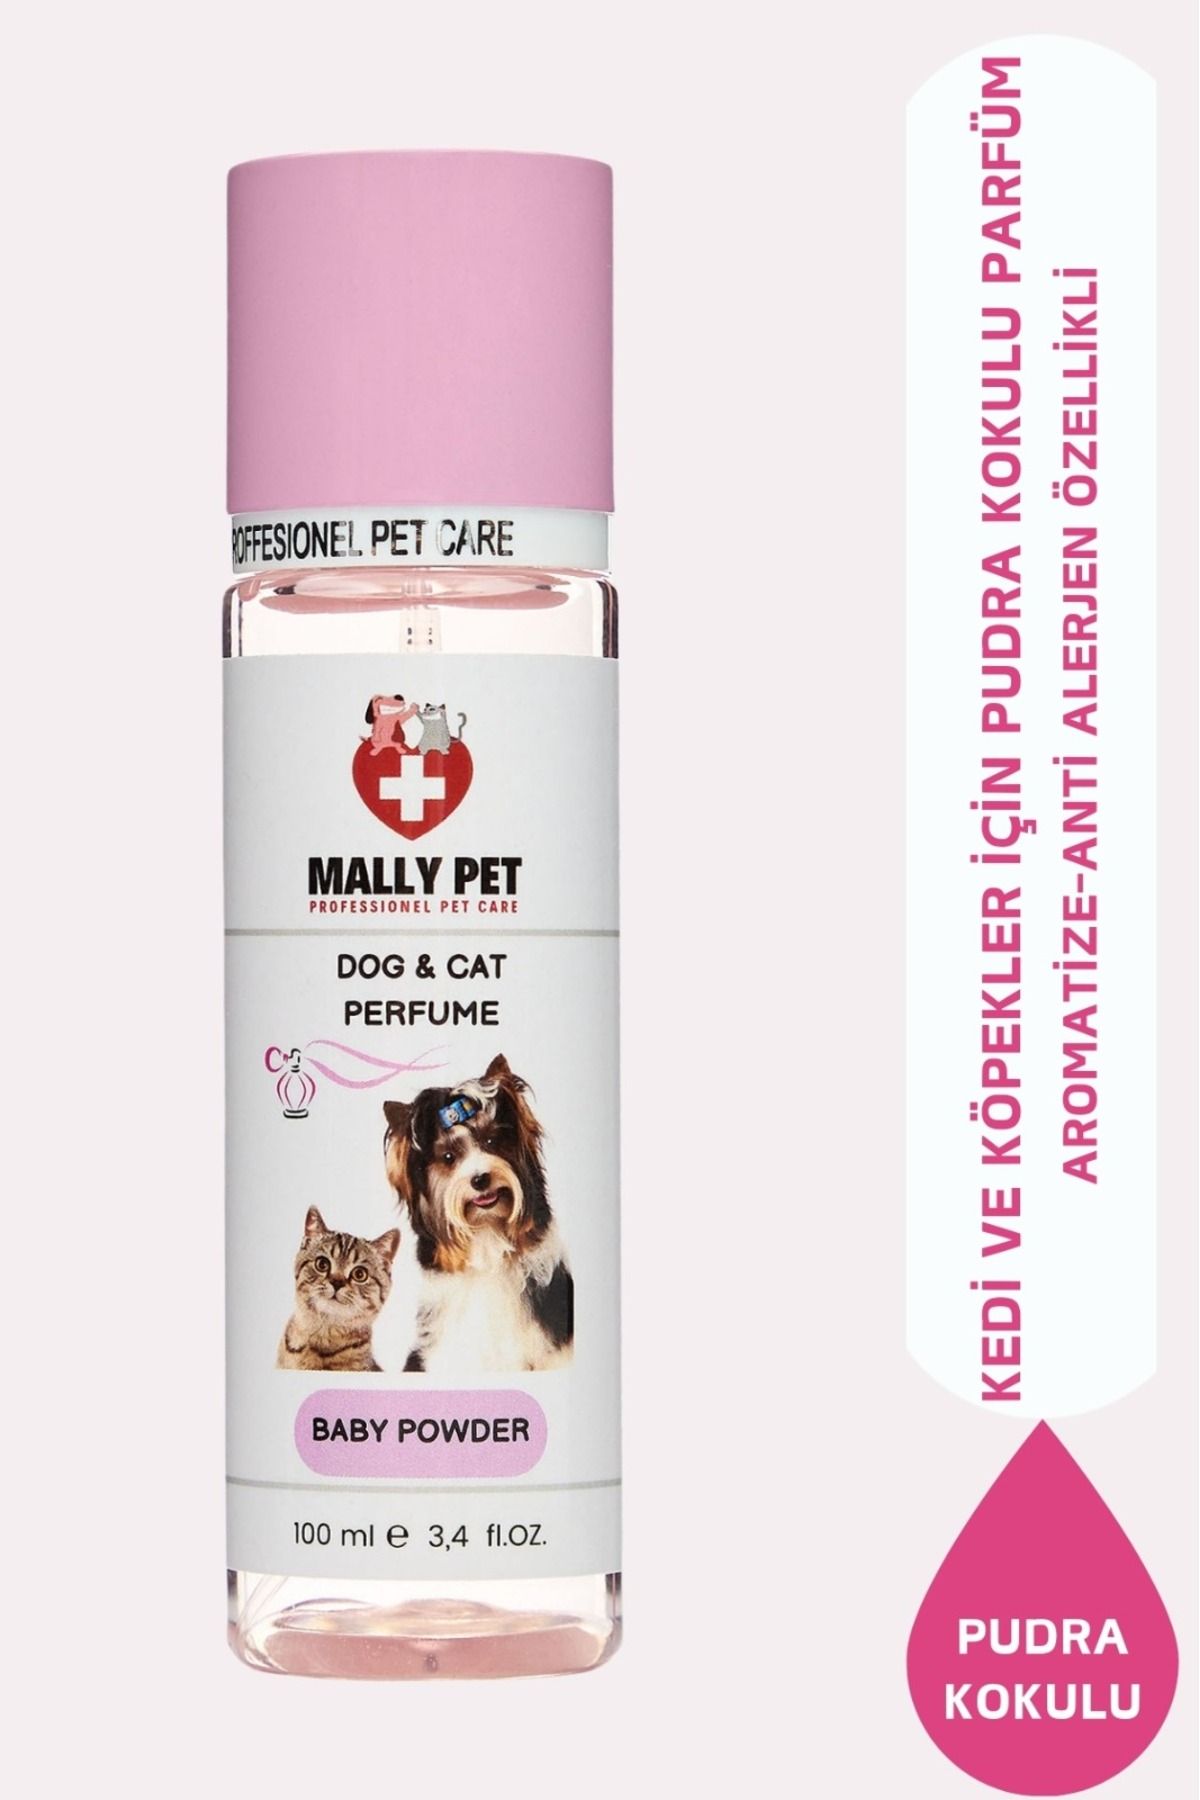 MALLY PET PROFESSIONEL PET CARE Bebek Pudrası Kokulu Kedi Ve Köpek Parfümü 100 ml